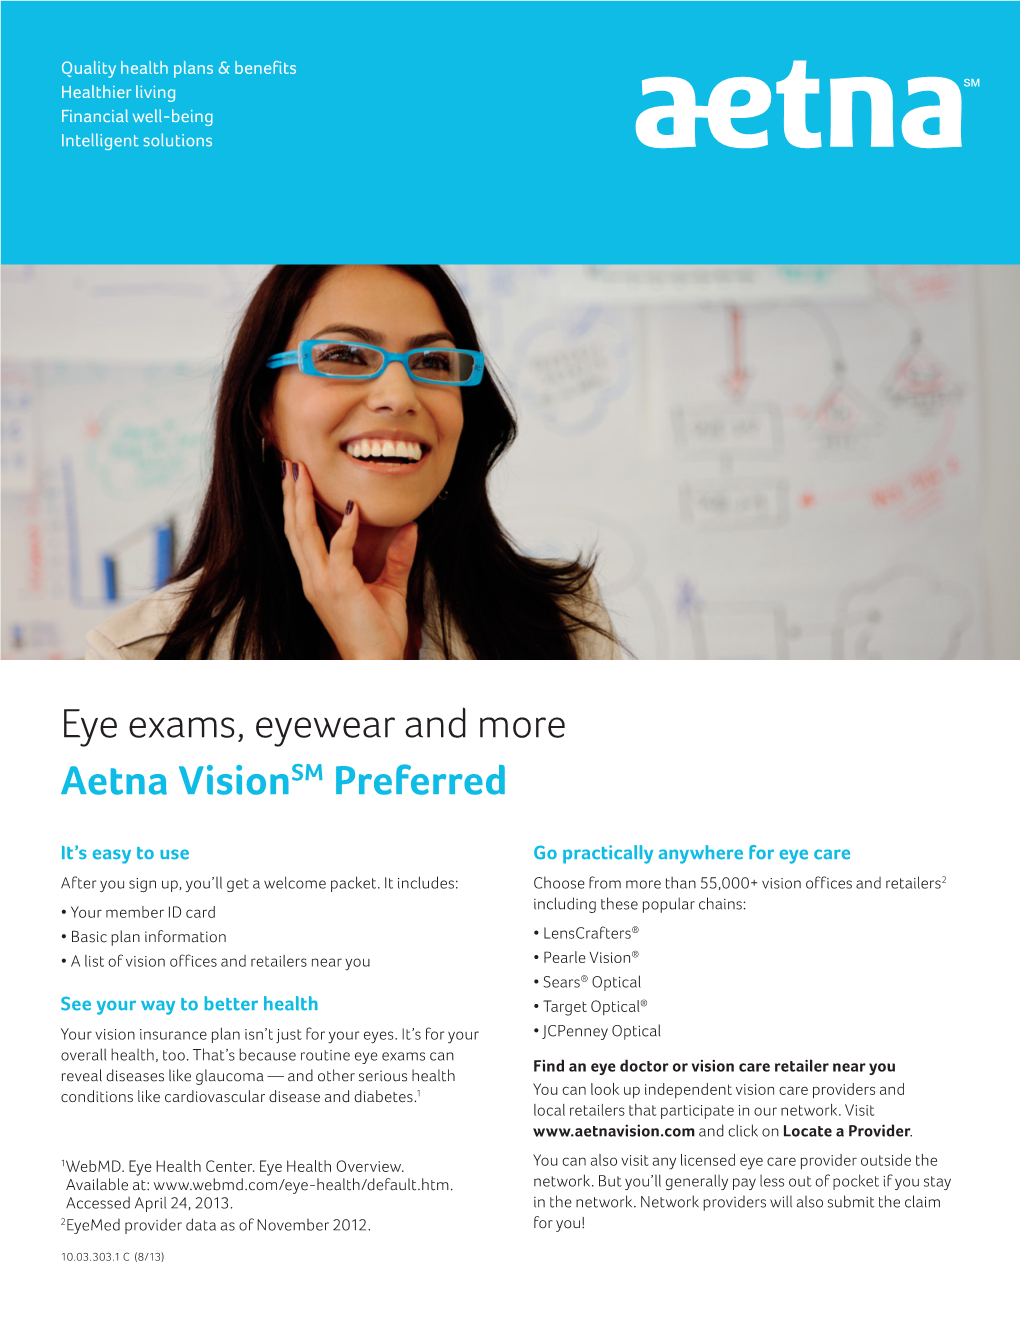 Eye Exams, Eyewear and More Aetna Visionsm Preferred